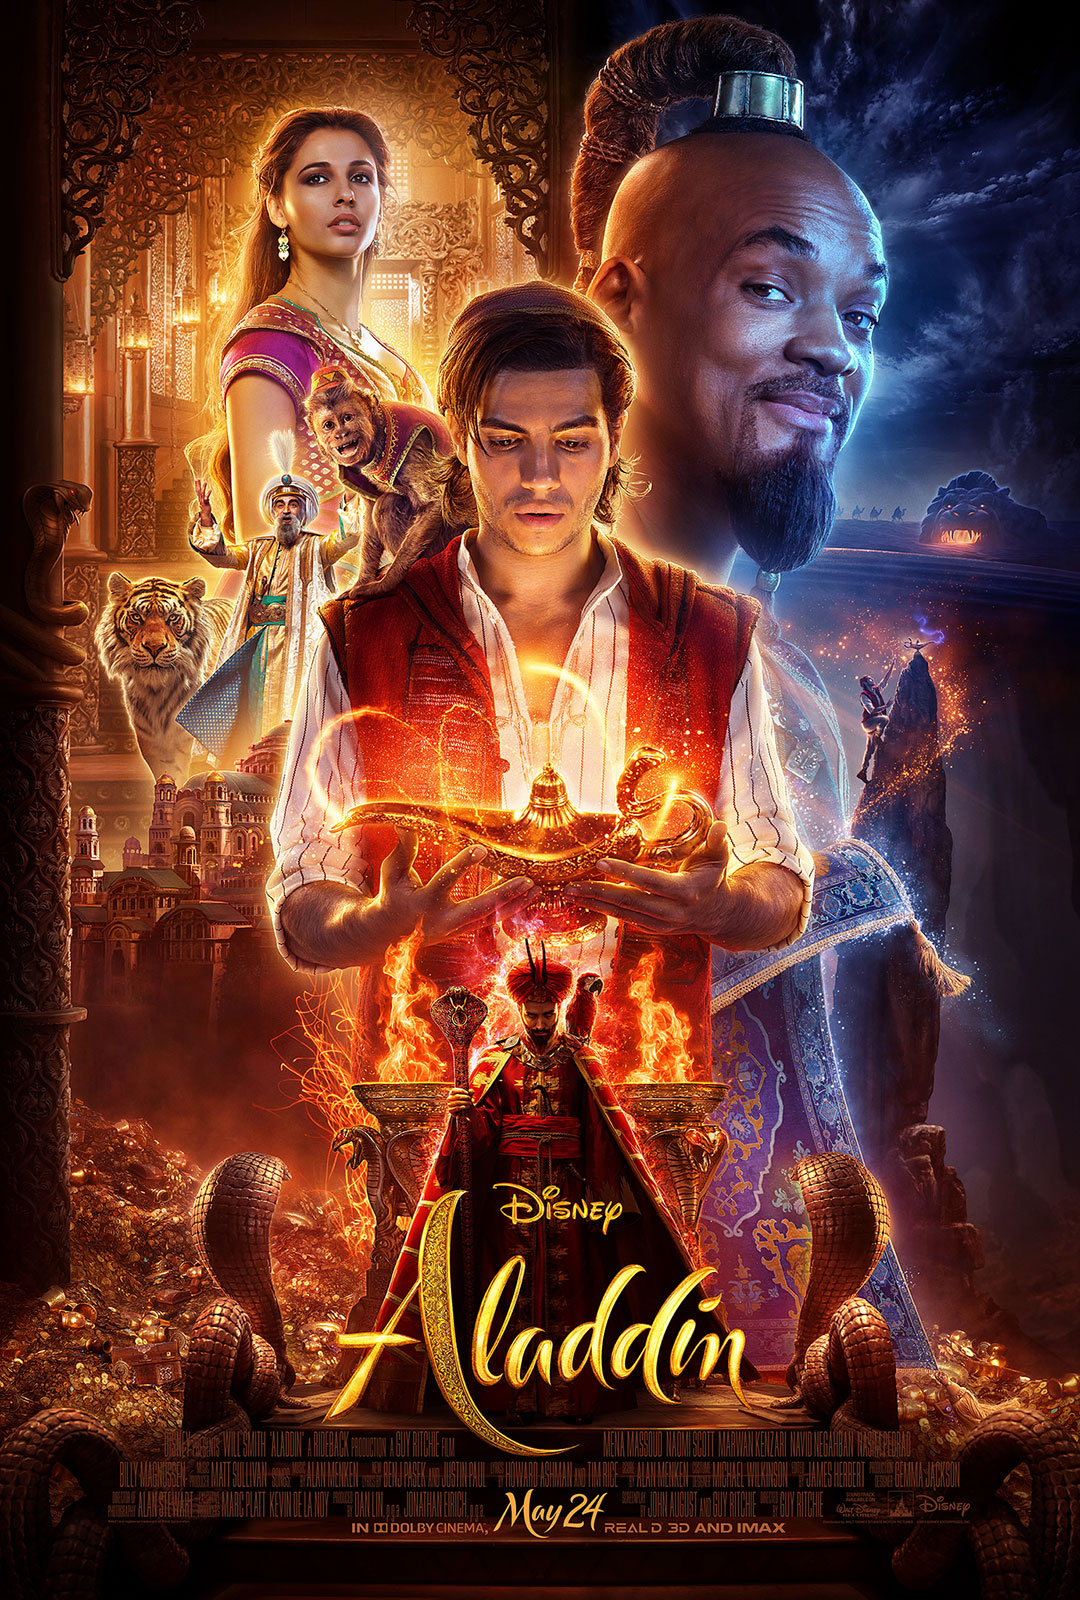 Disney's Aladdin Official Trailer